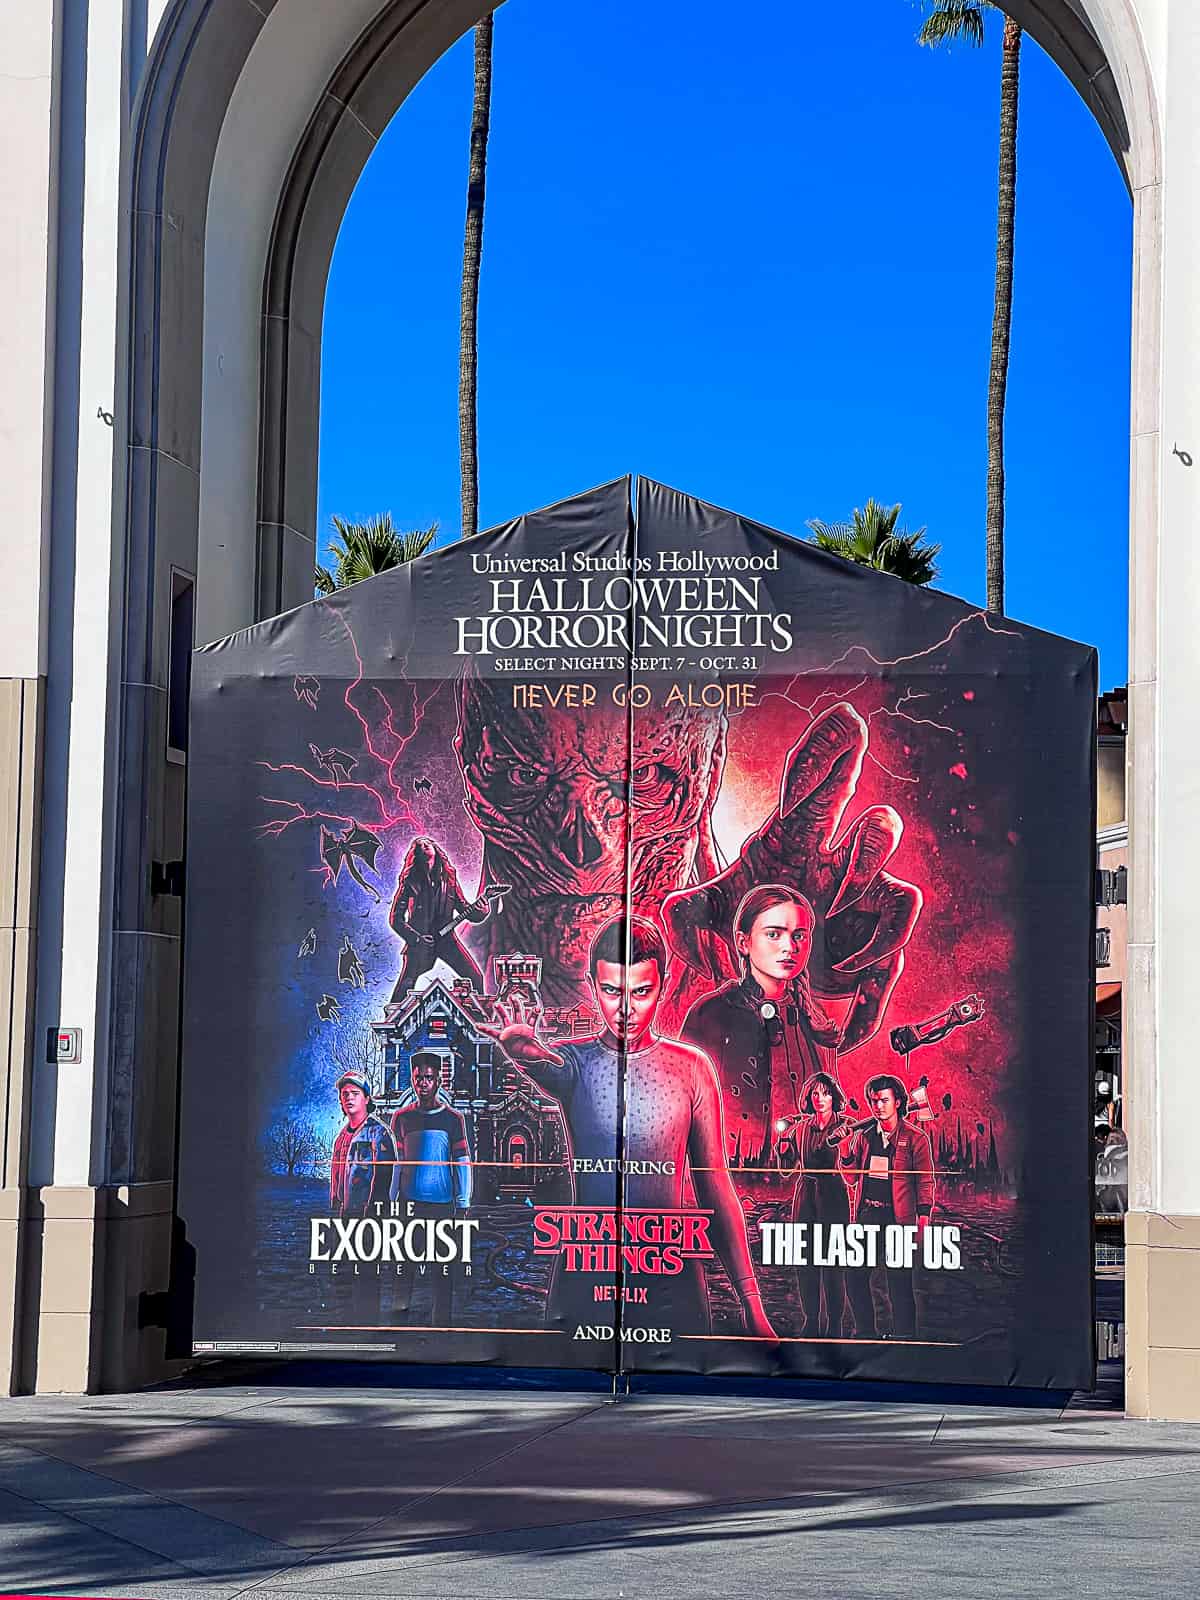 Universal Studios Hollywood Halloween Horror Nights Event Entrance